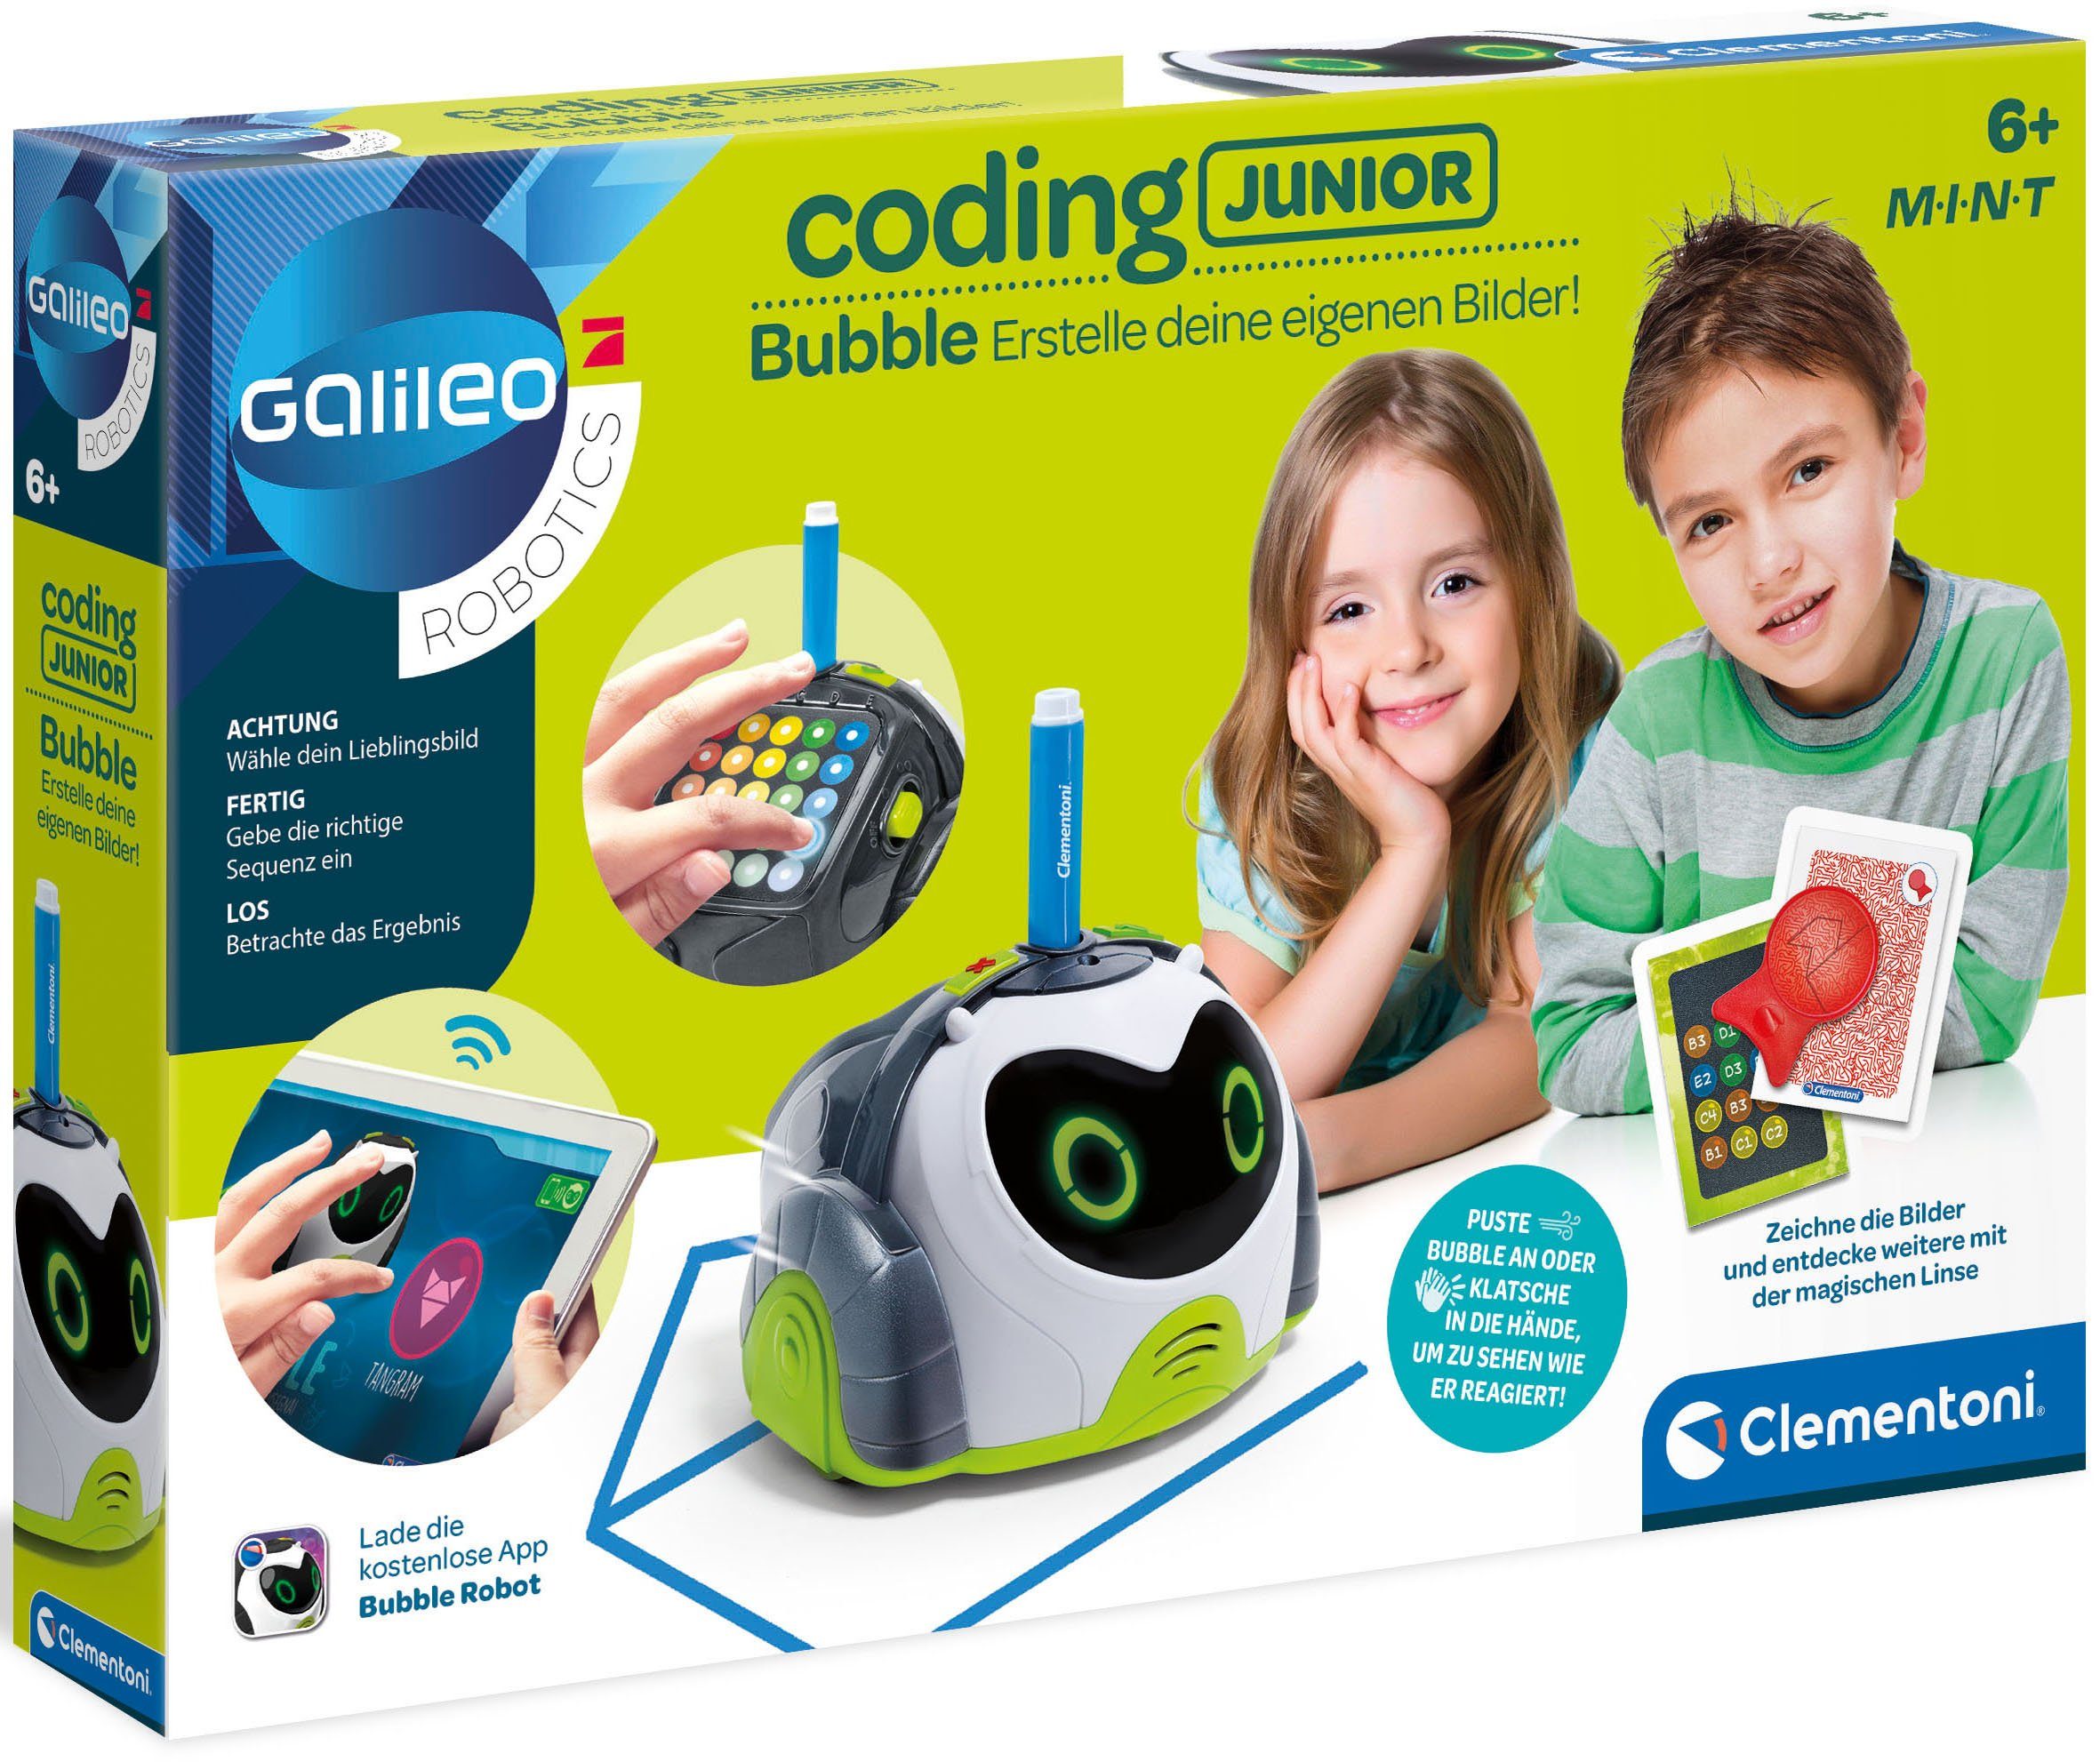 Clementoni Galileo Coding Junior Bubble